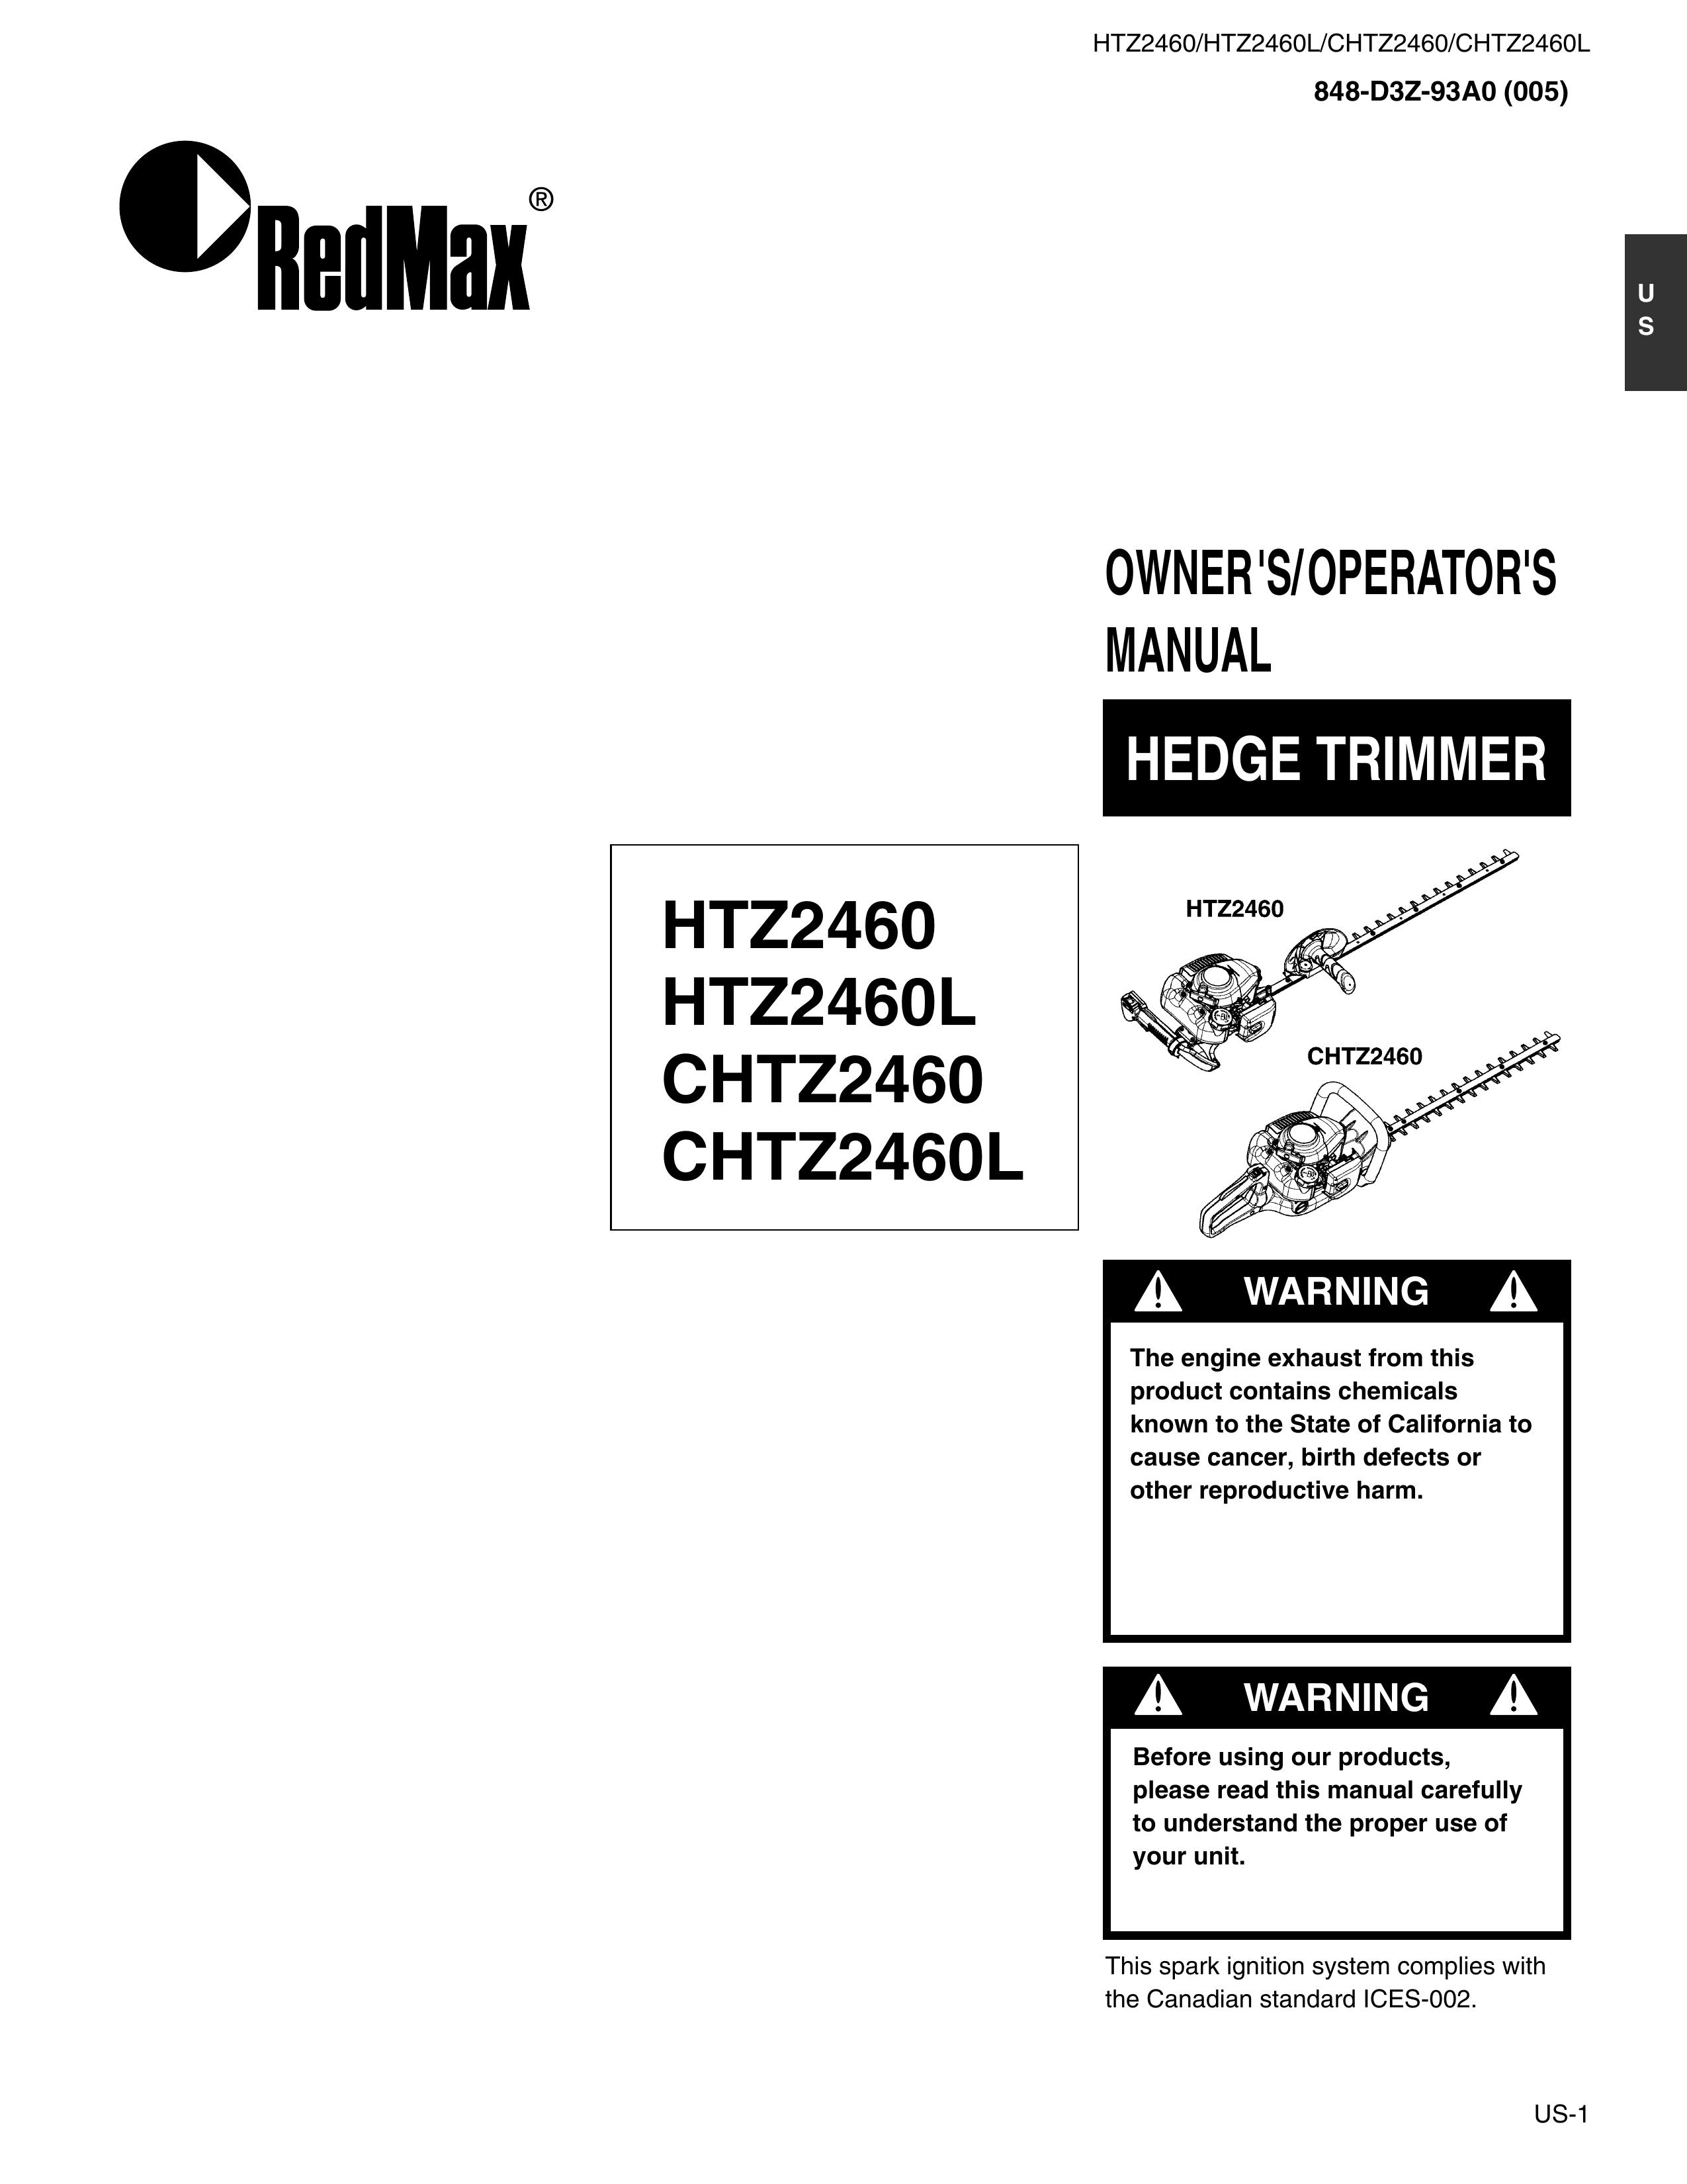 RedMax CHTZ2460 Trimmer User Manual